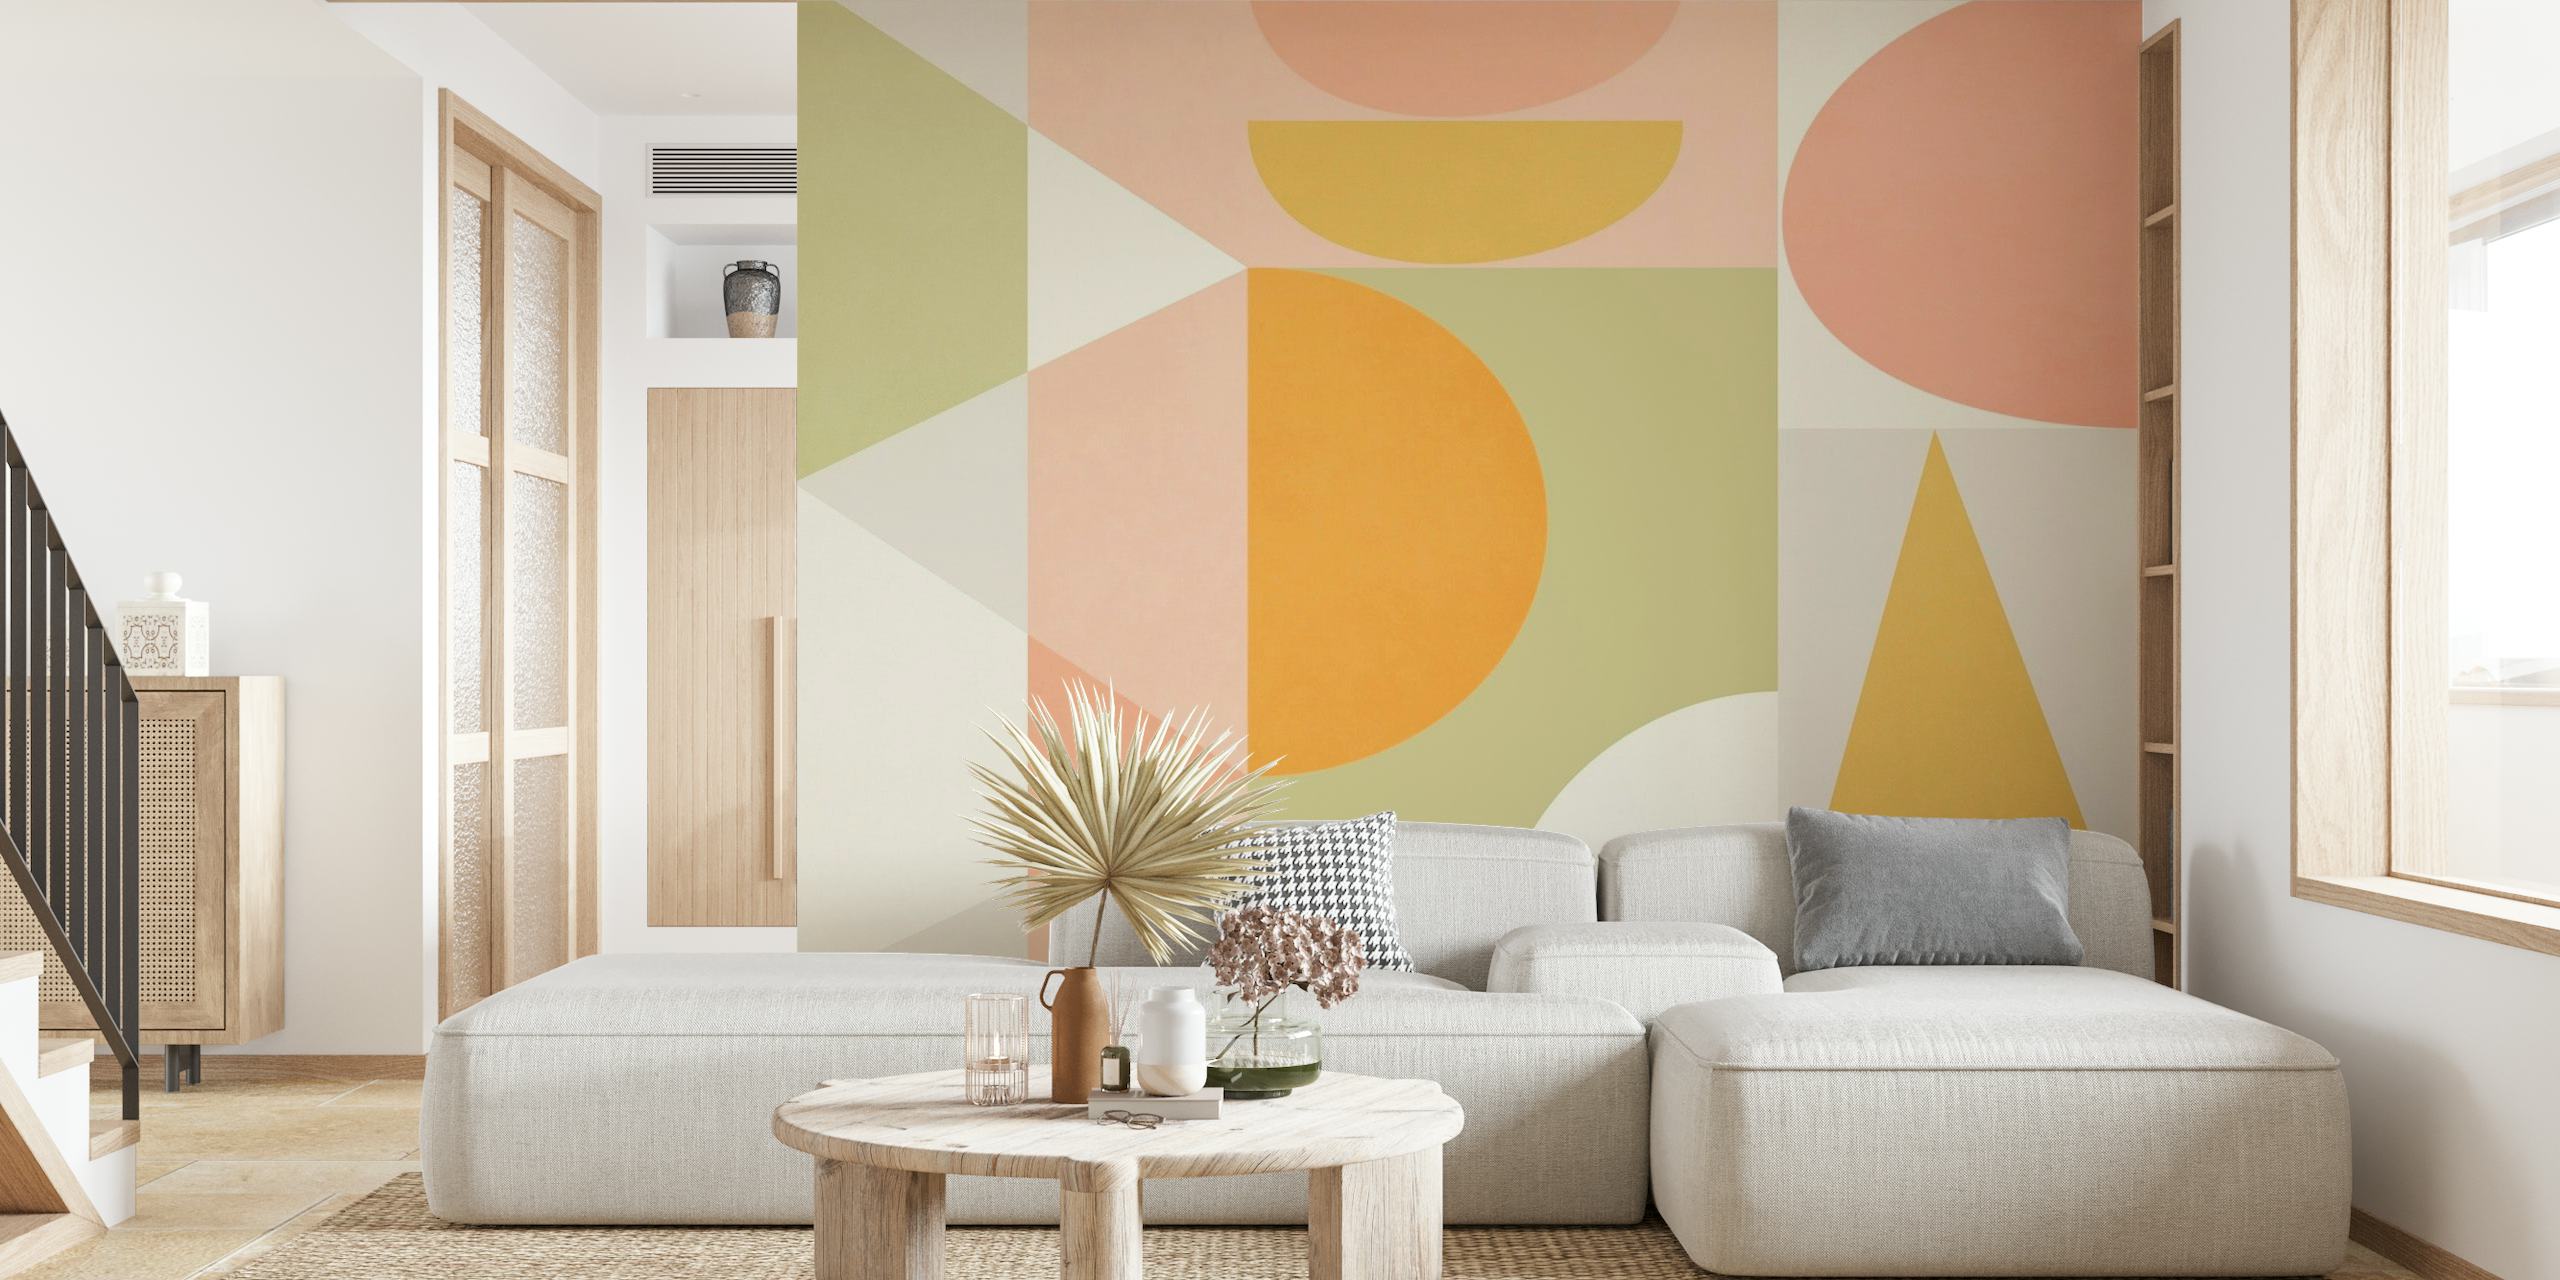 Abstrakt geometrisk G3-vægmaleri med pastelfarver og dristige former